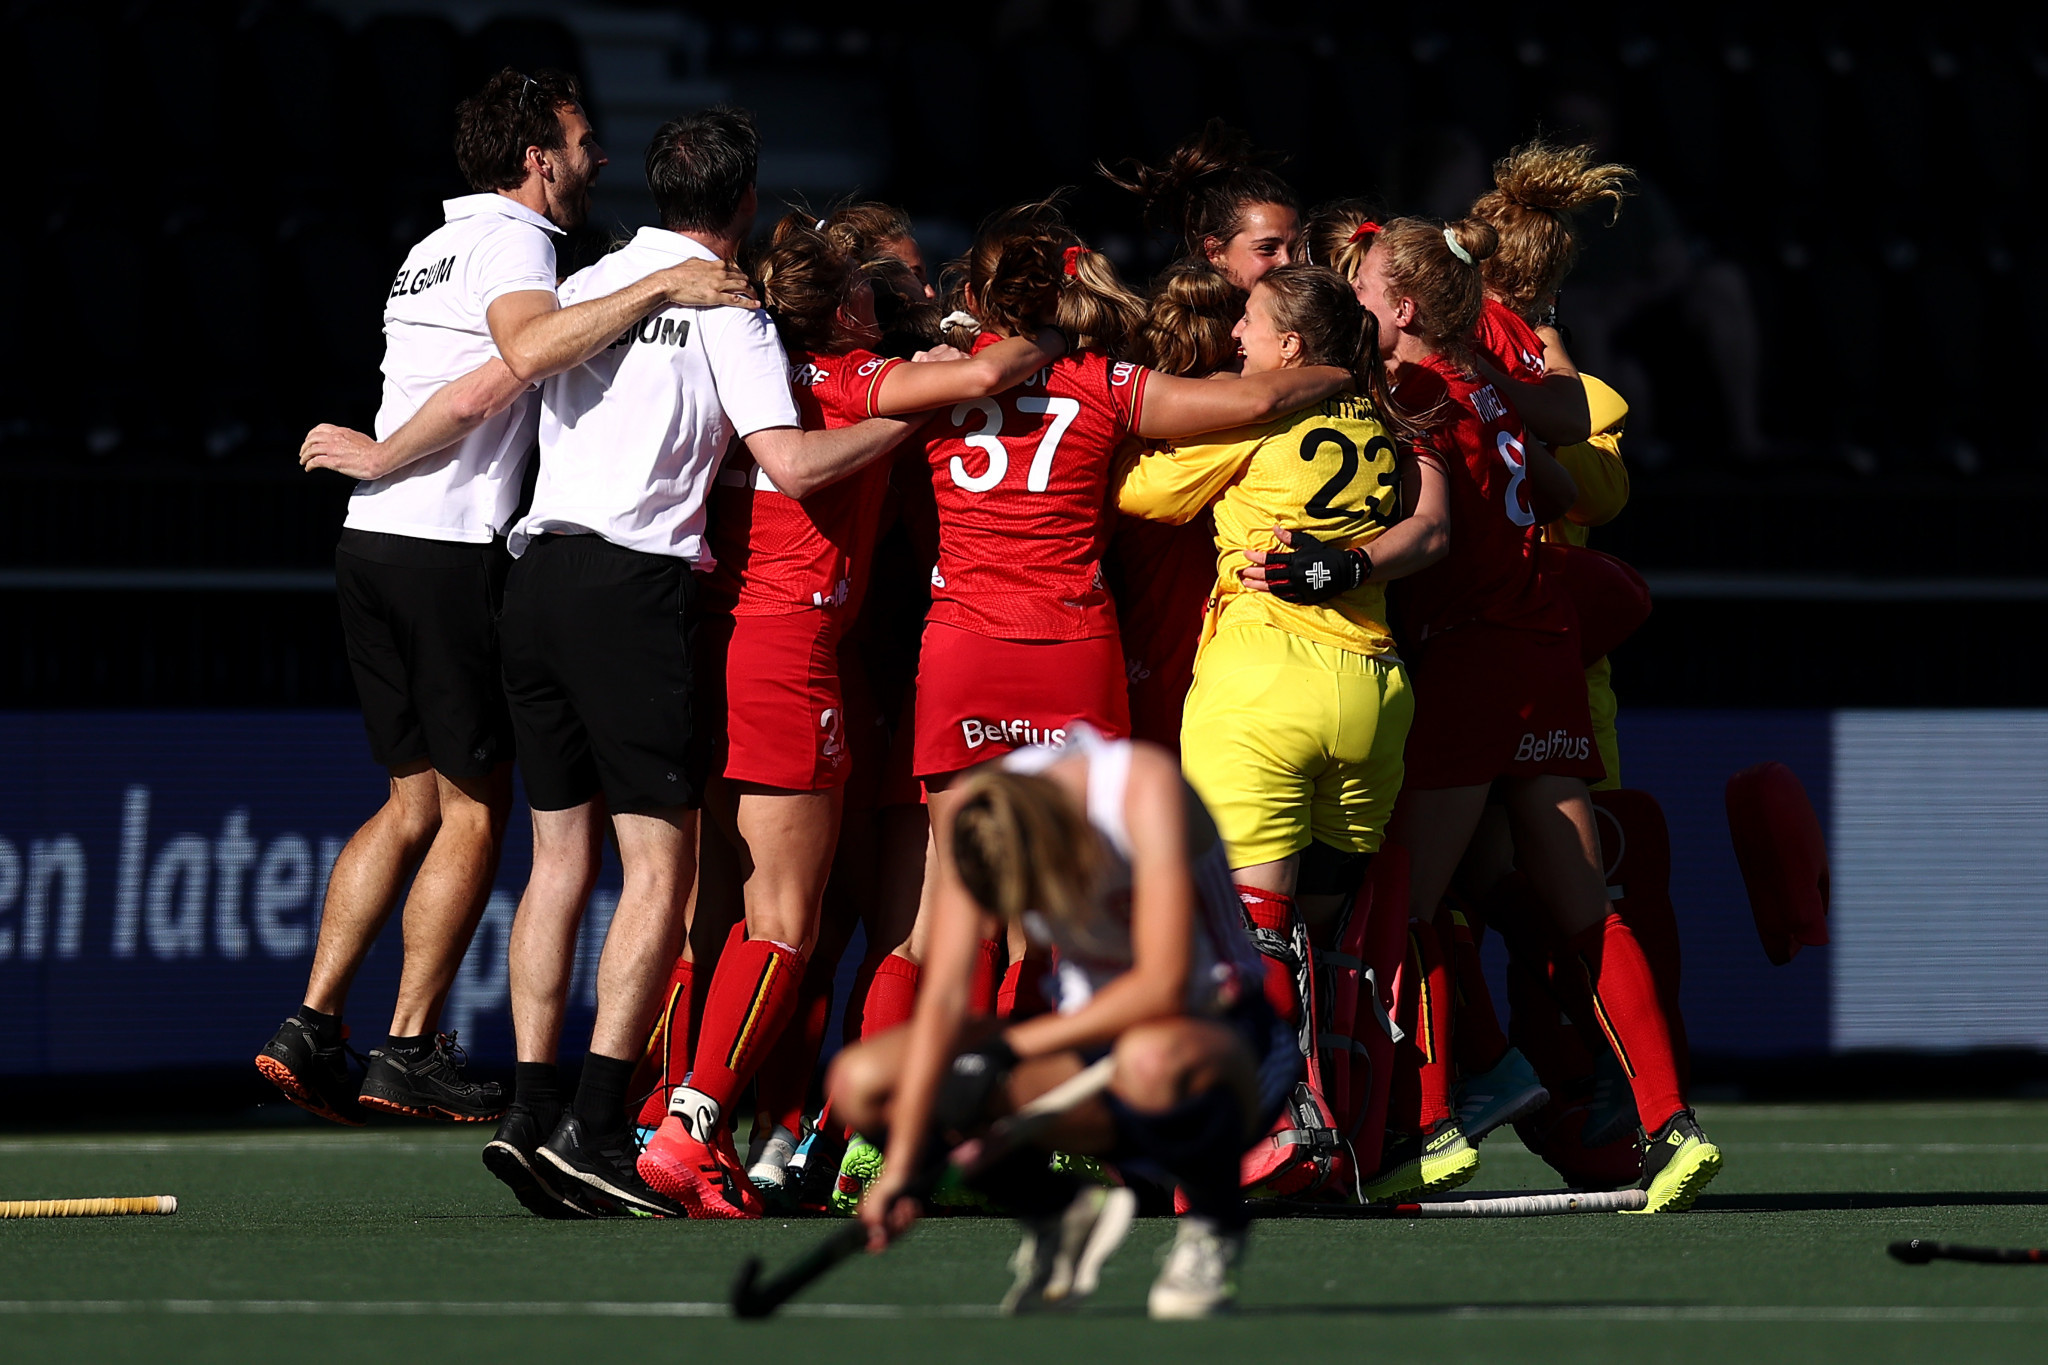 Late Belgium goal knocks England out of women's EuroHockey Championship